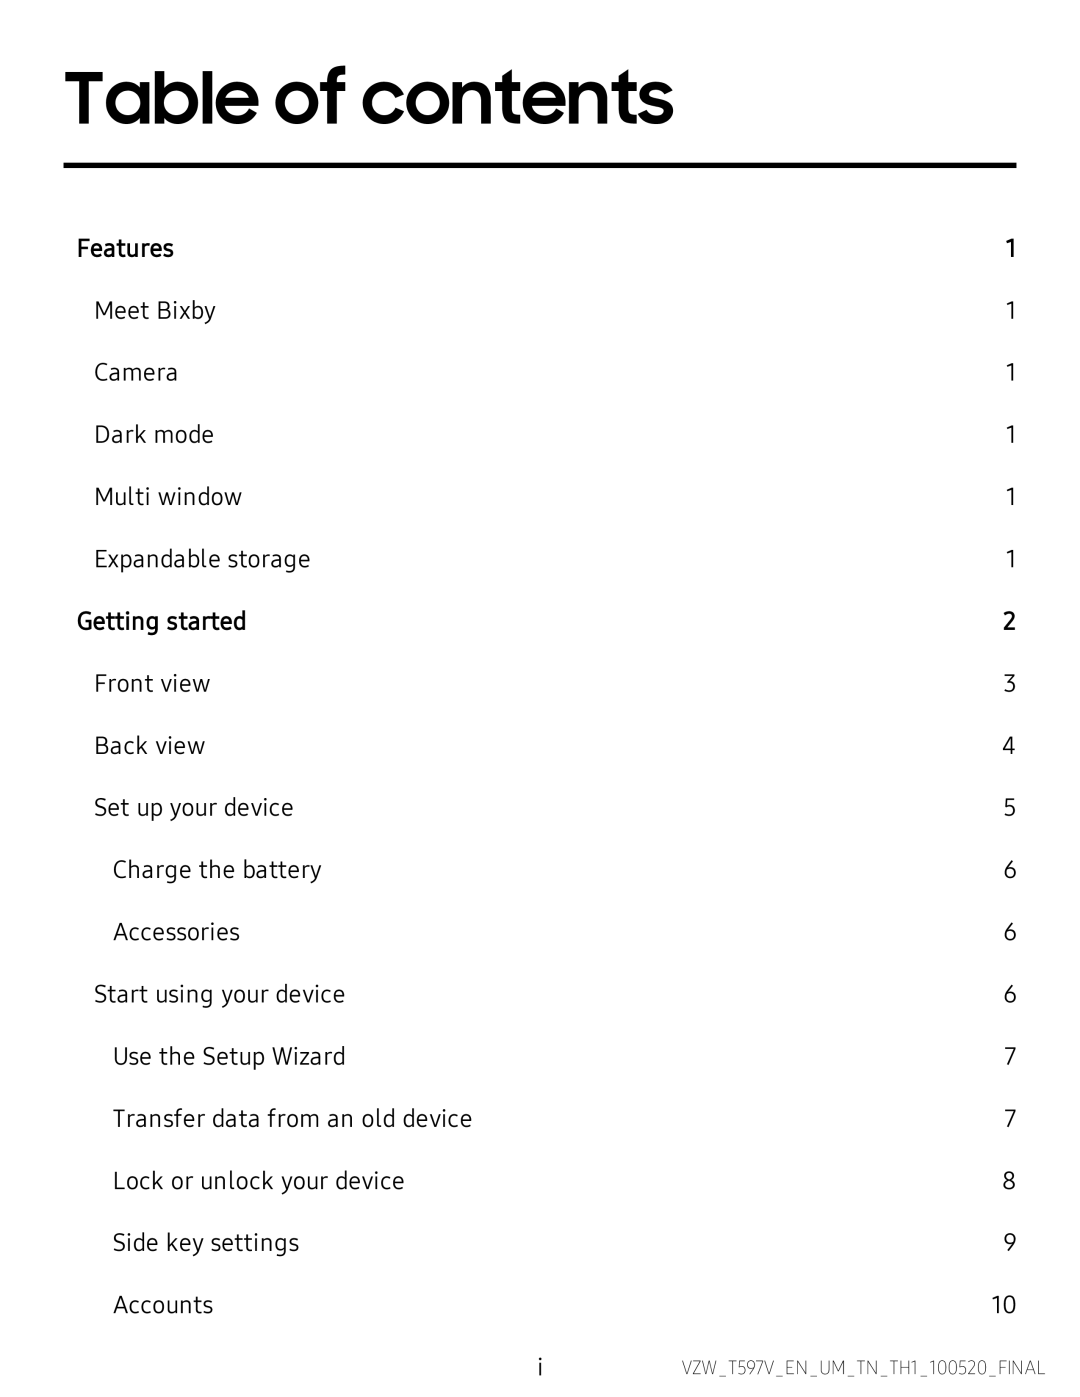 Table of contents Galaxy Tab A 10.5 Verizon